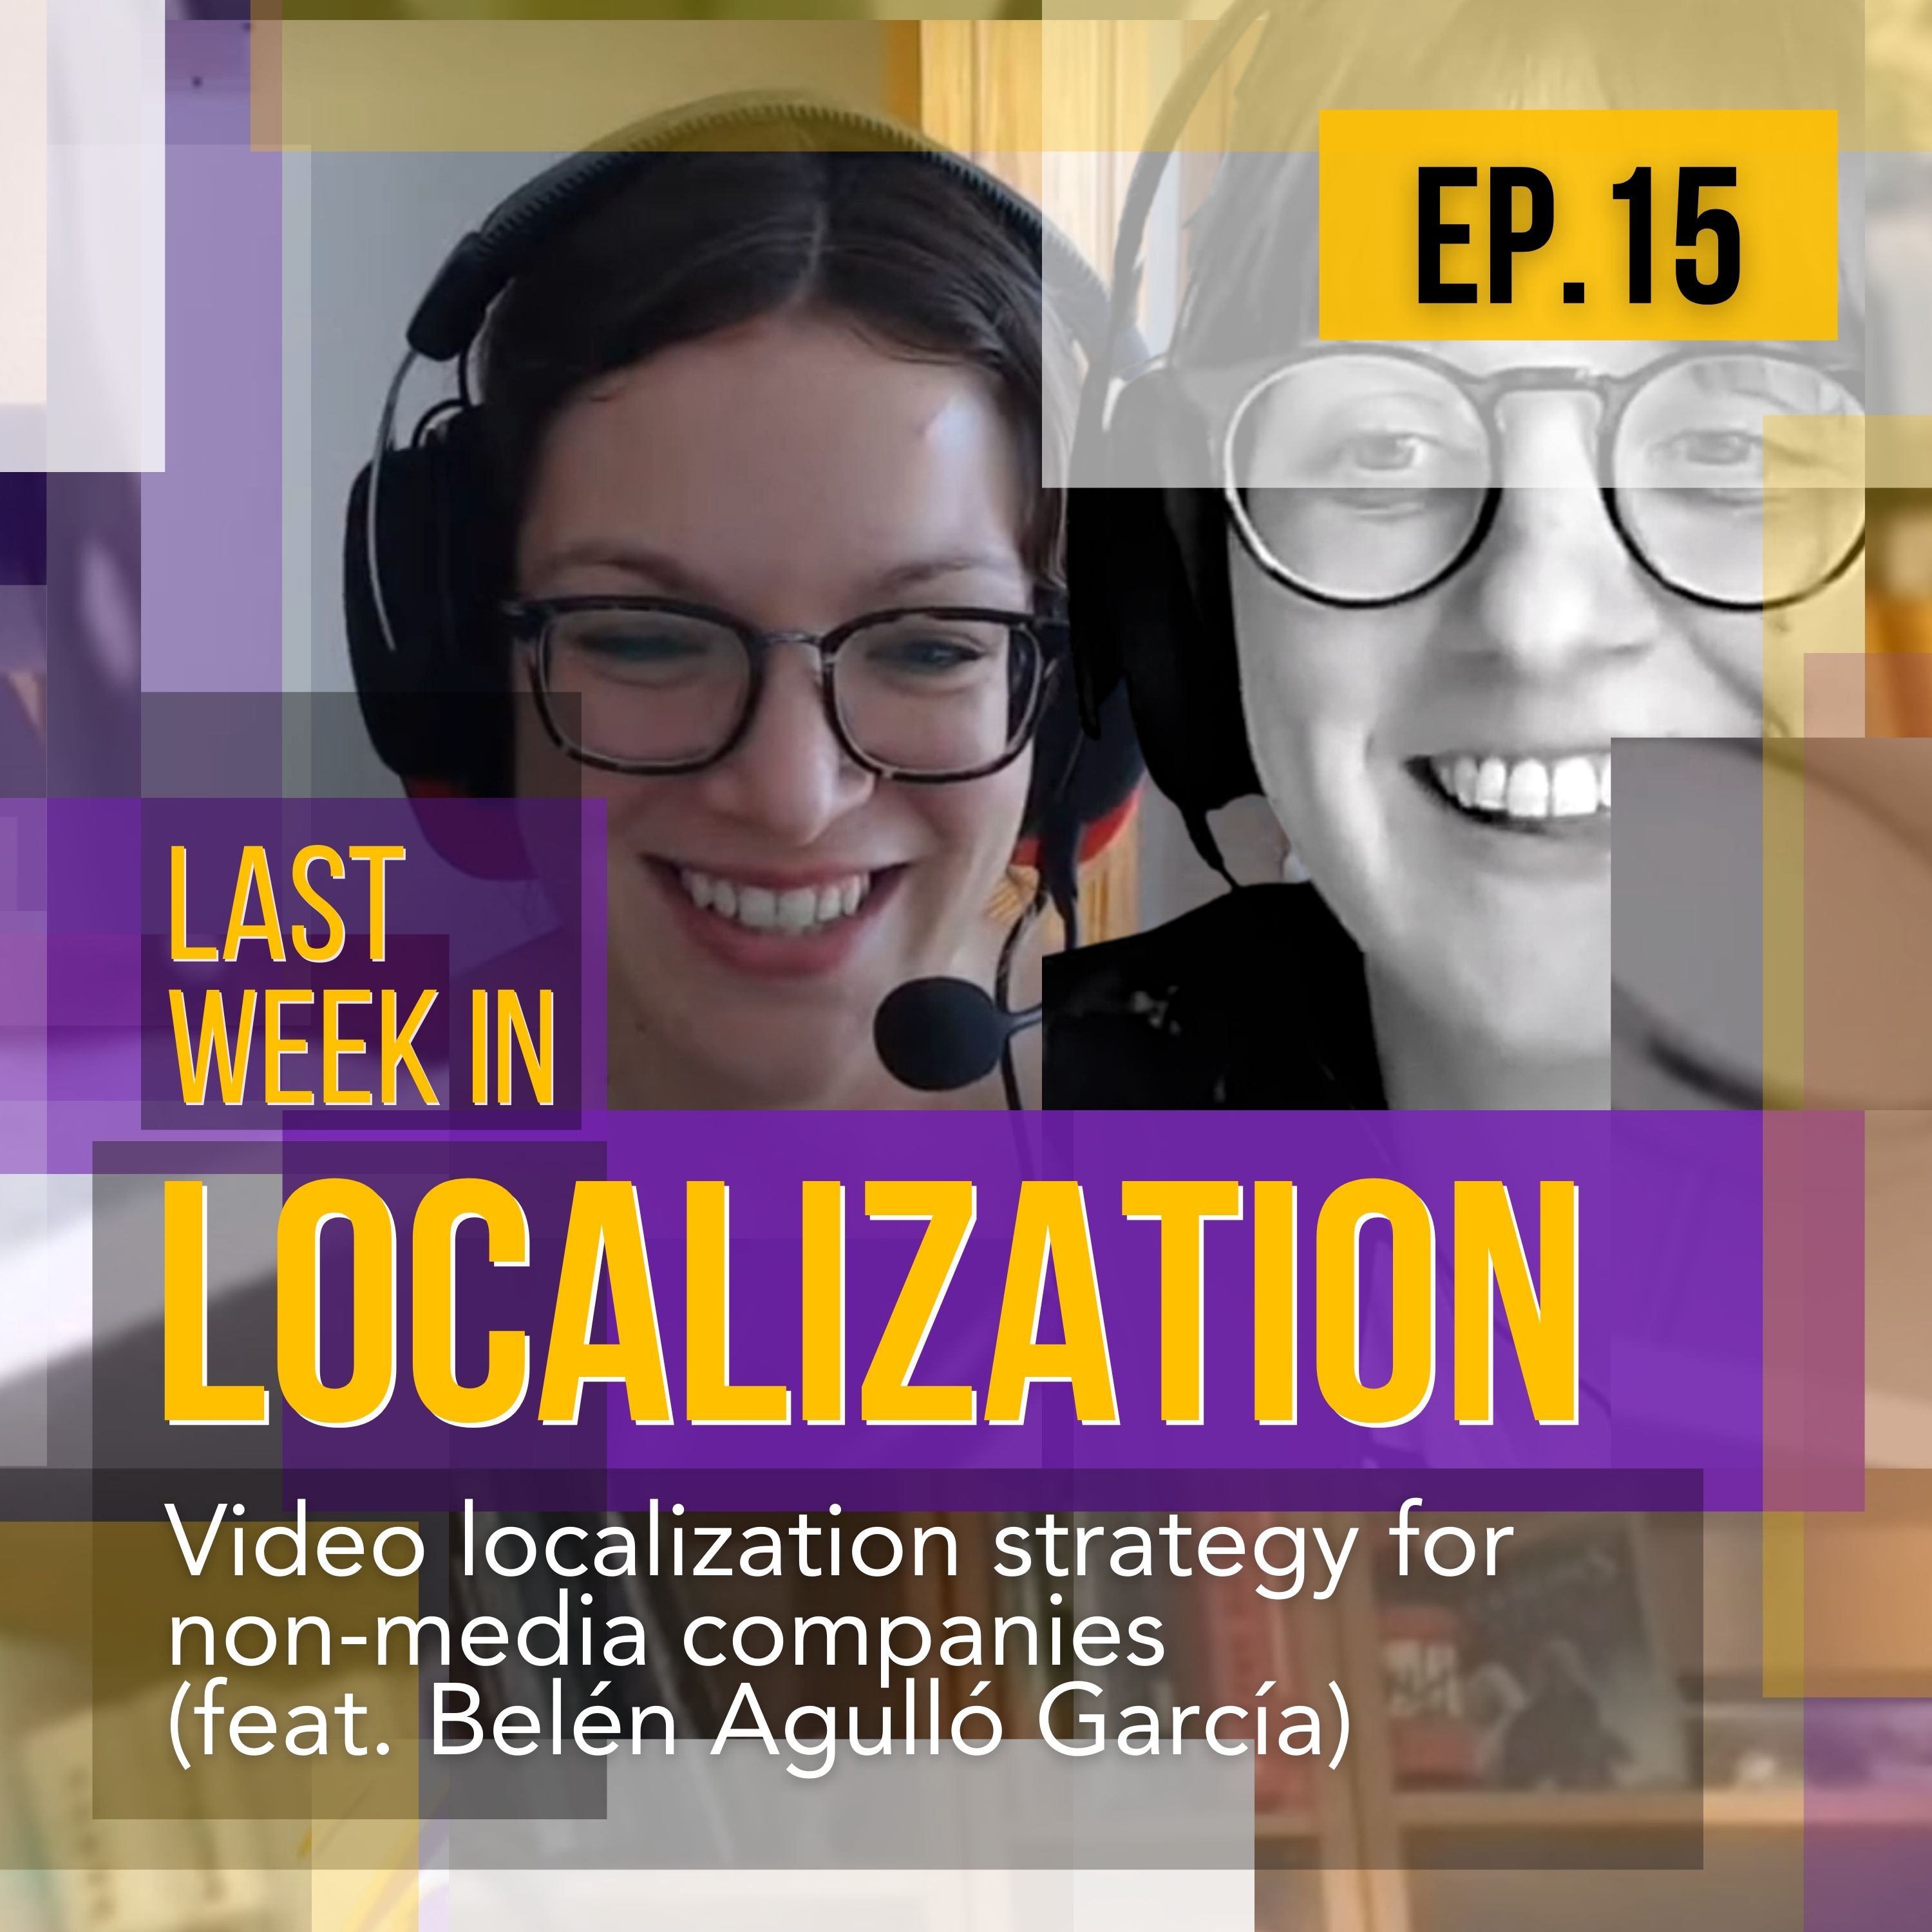 Video localization strategy for non-media companies (feat. Belén Agulló García)